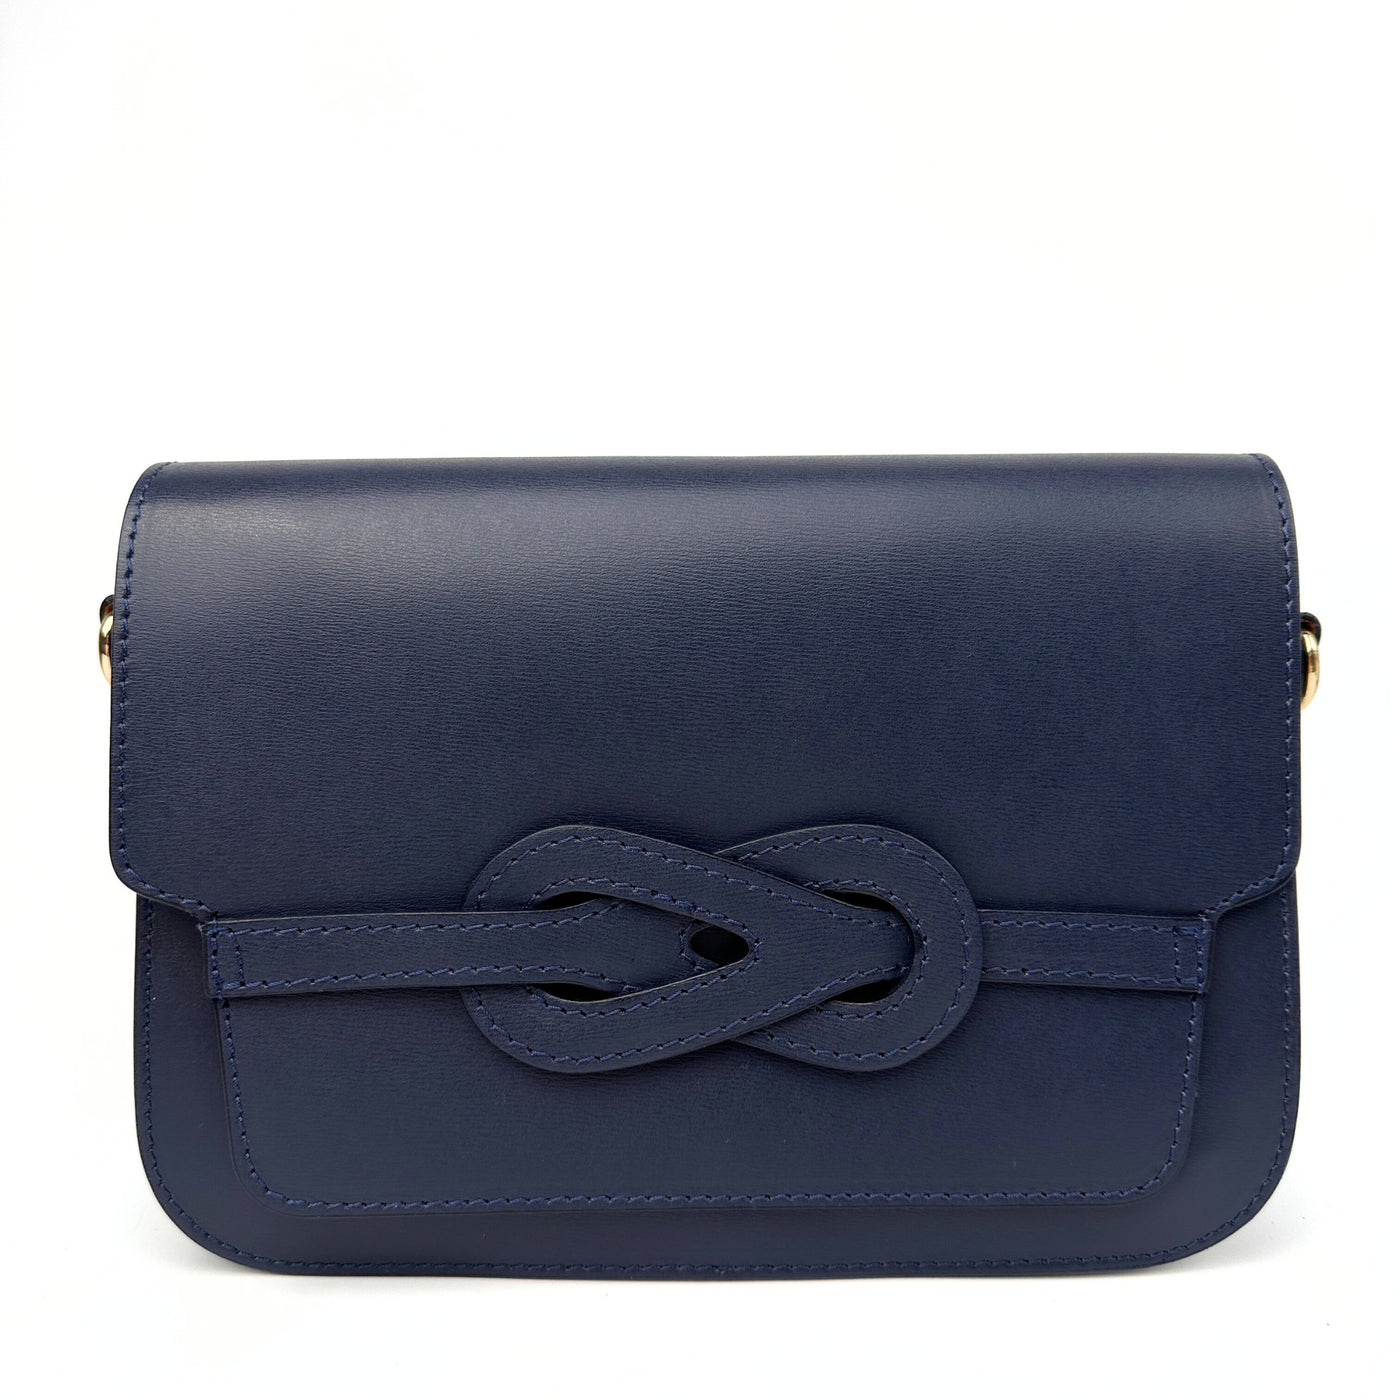 Leather bag "Naples", Dark blue